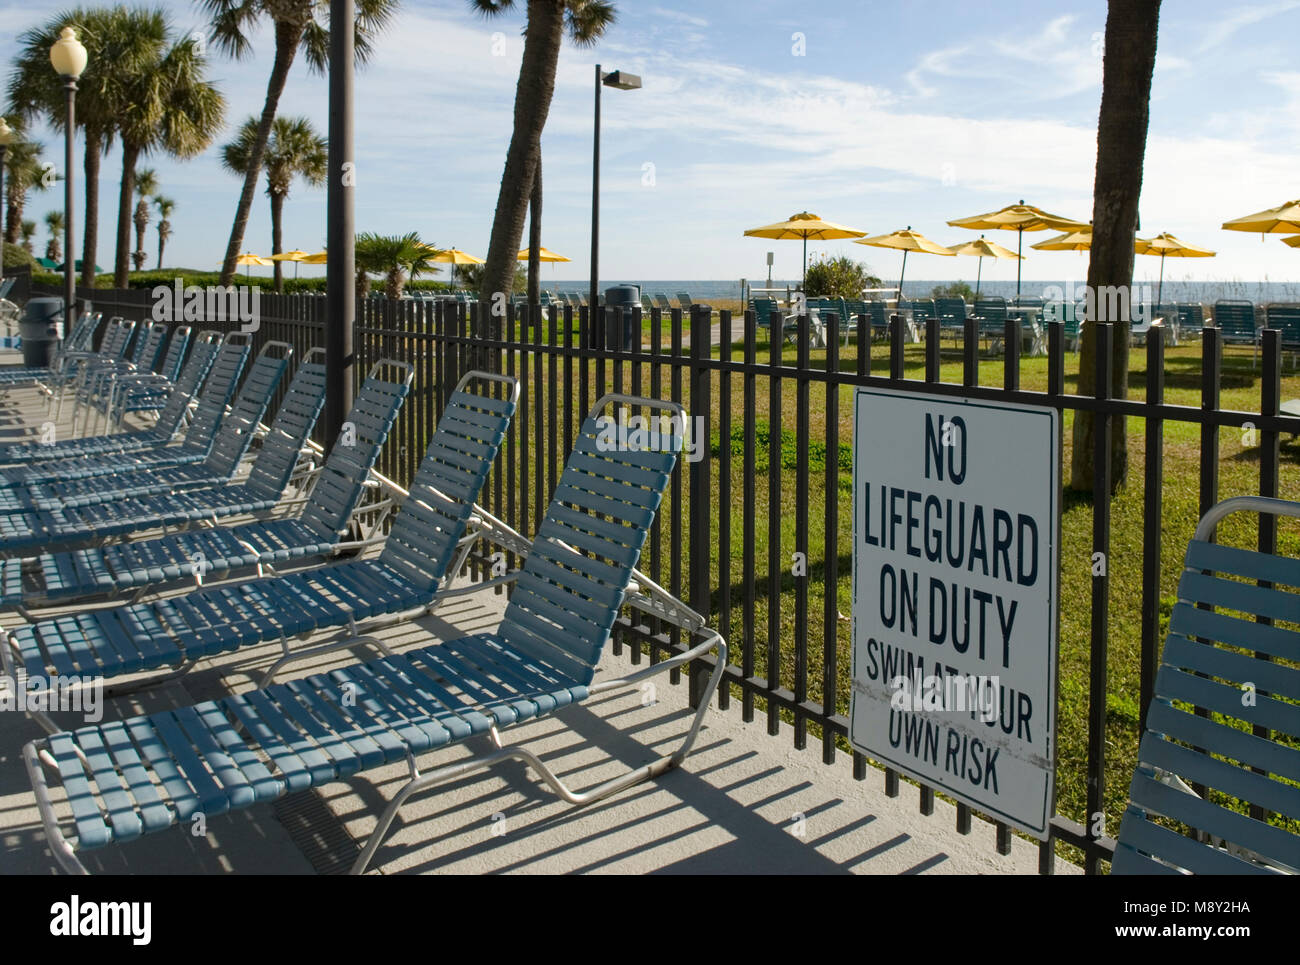 No lifeguard swimming pool sign. Stock Photo